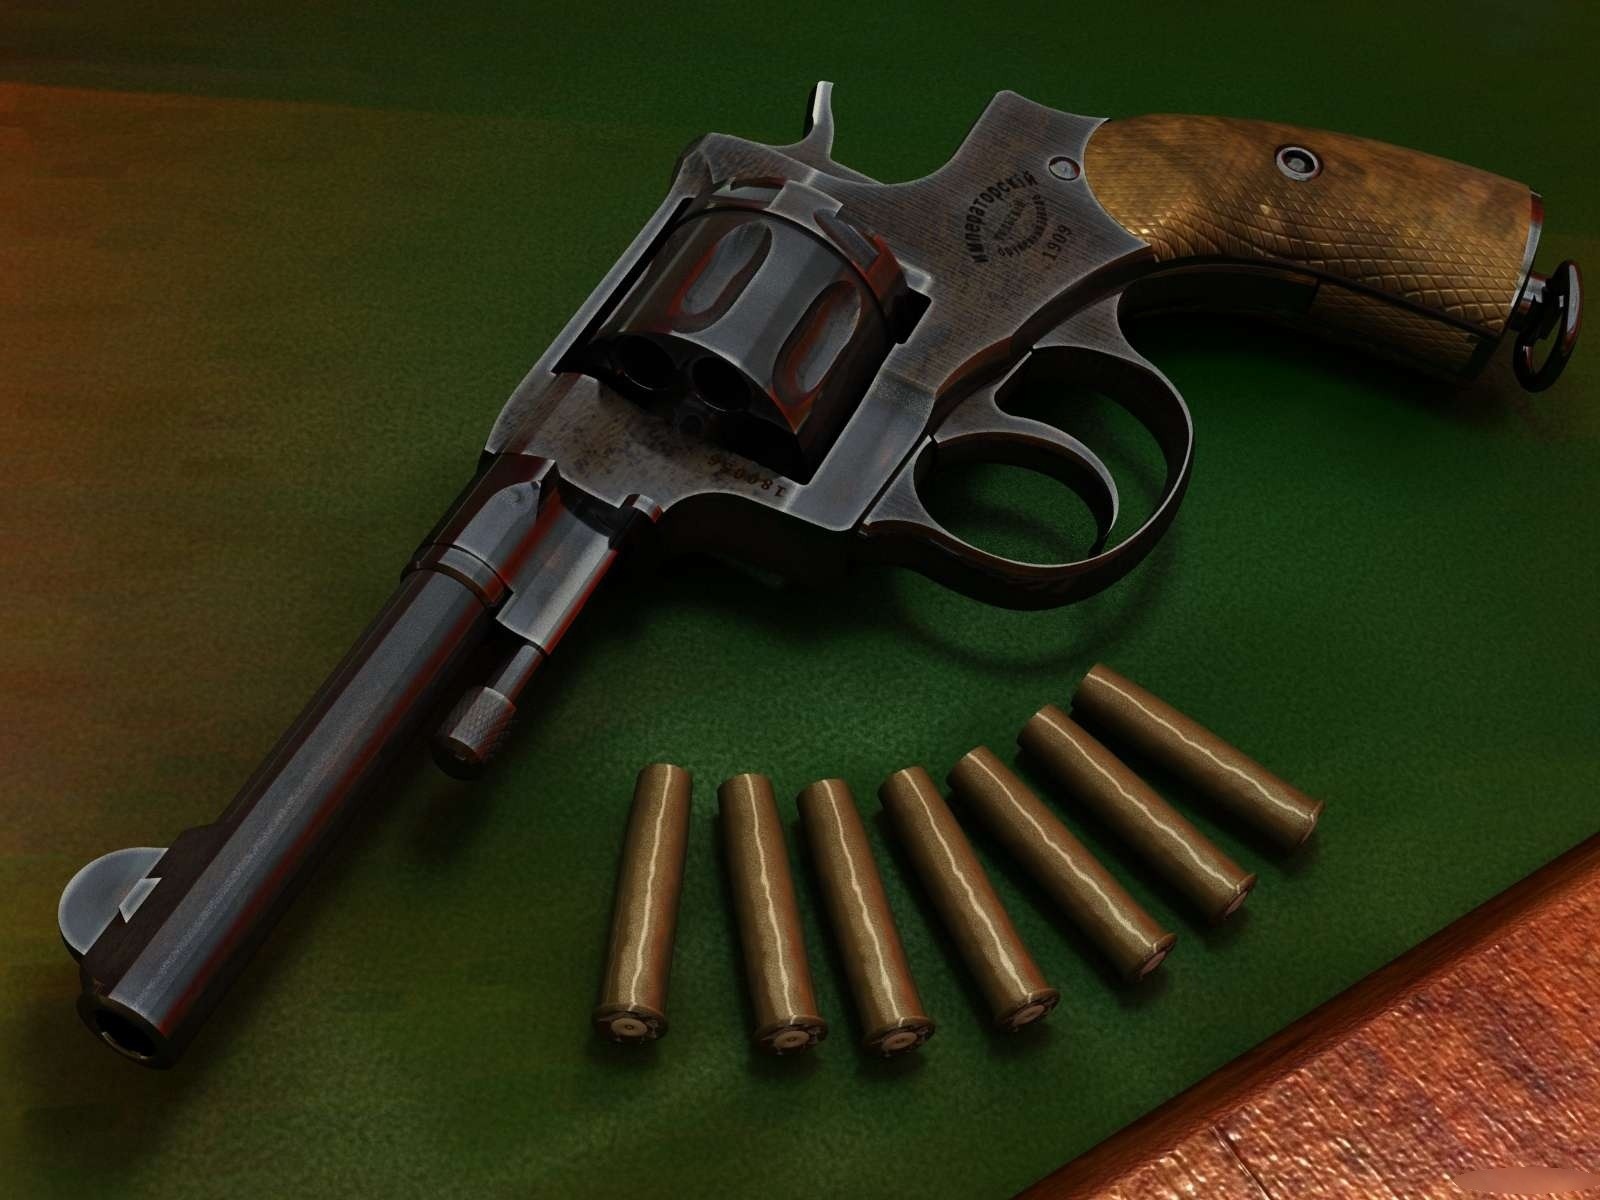 Nagant M1895 Revolver 1080p